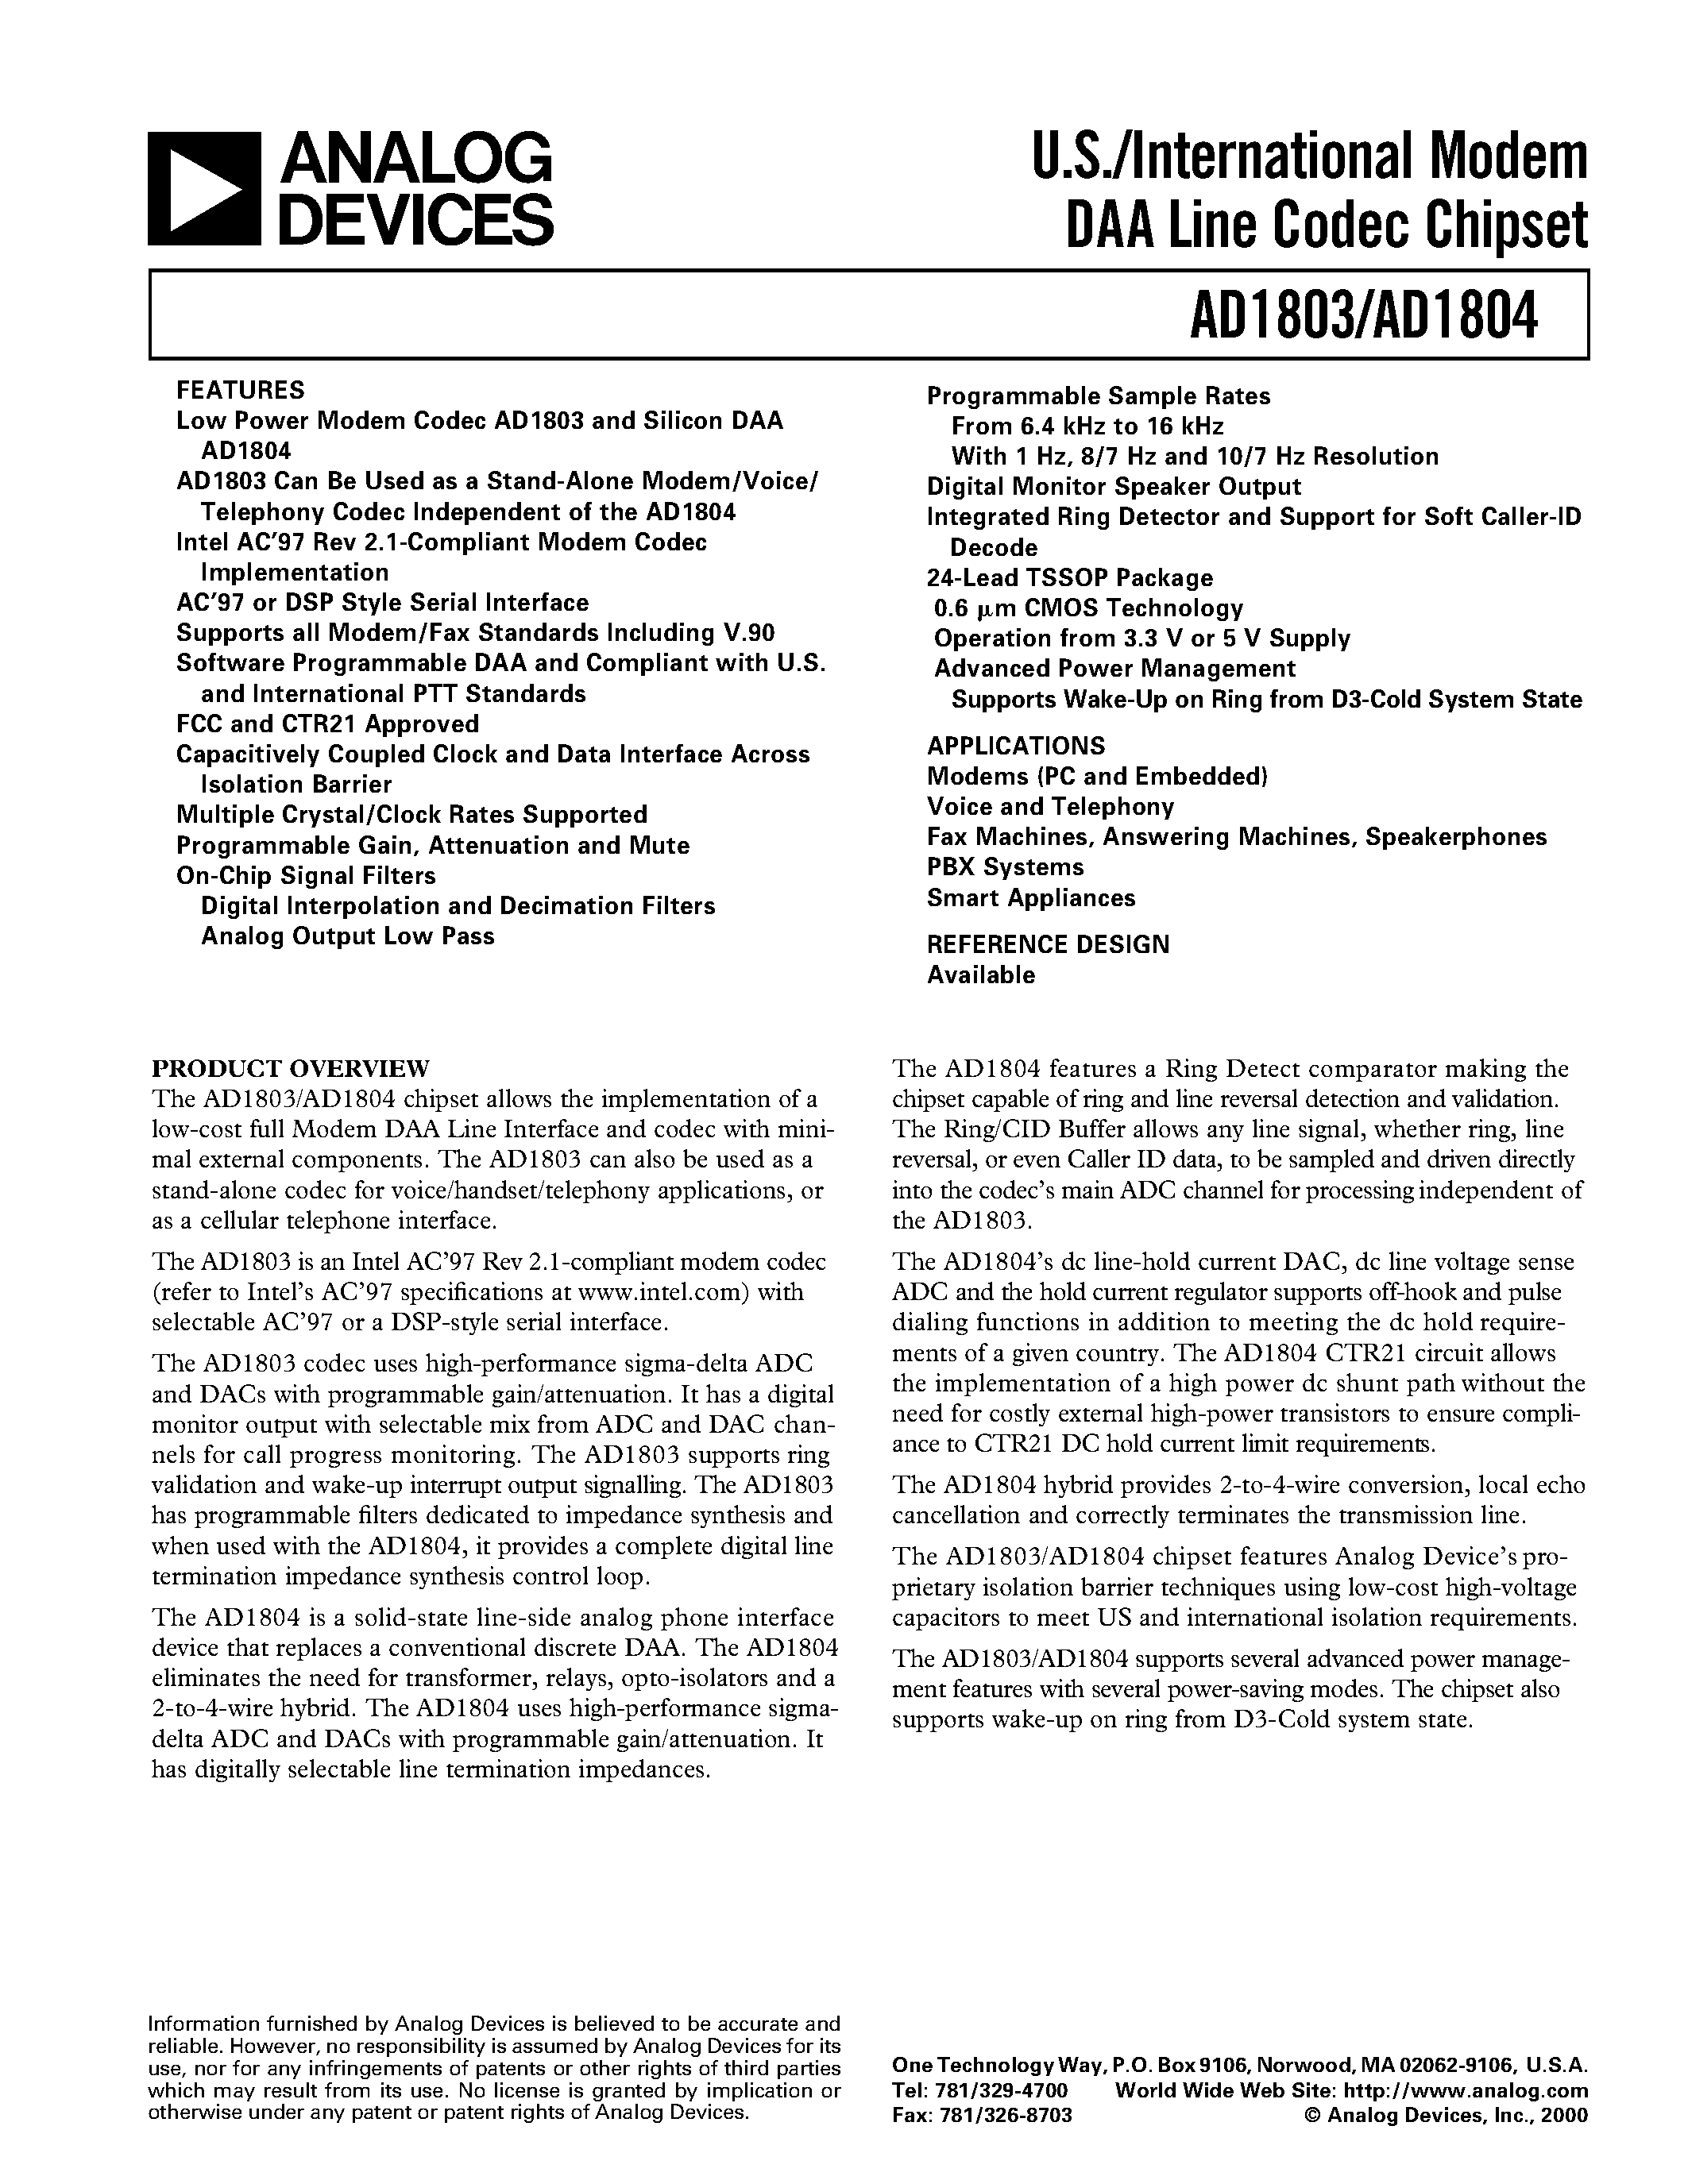 Datasheet AD1803 - U.S./International Modem DAA Line Codec Chipset page 1